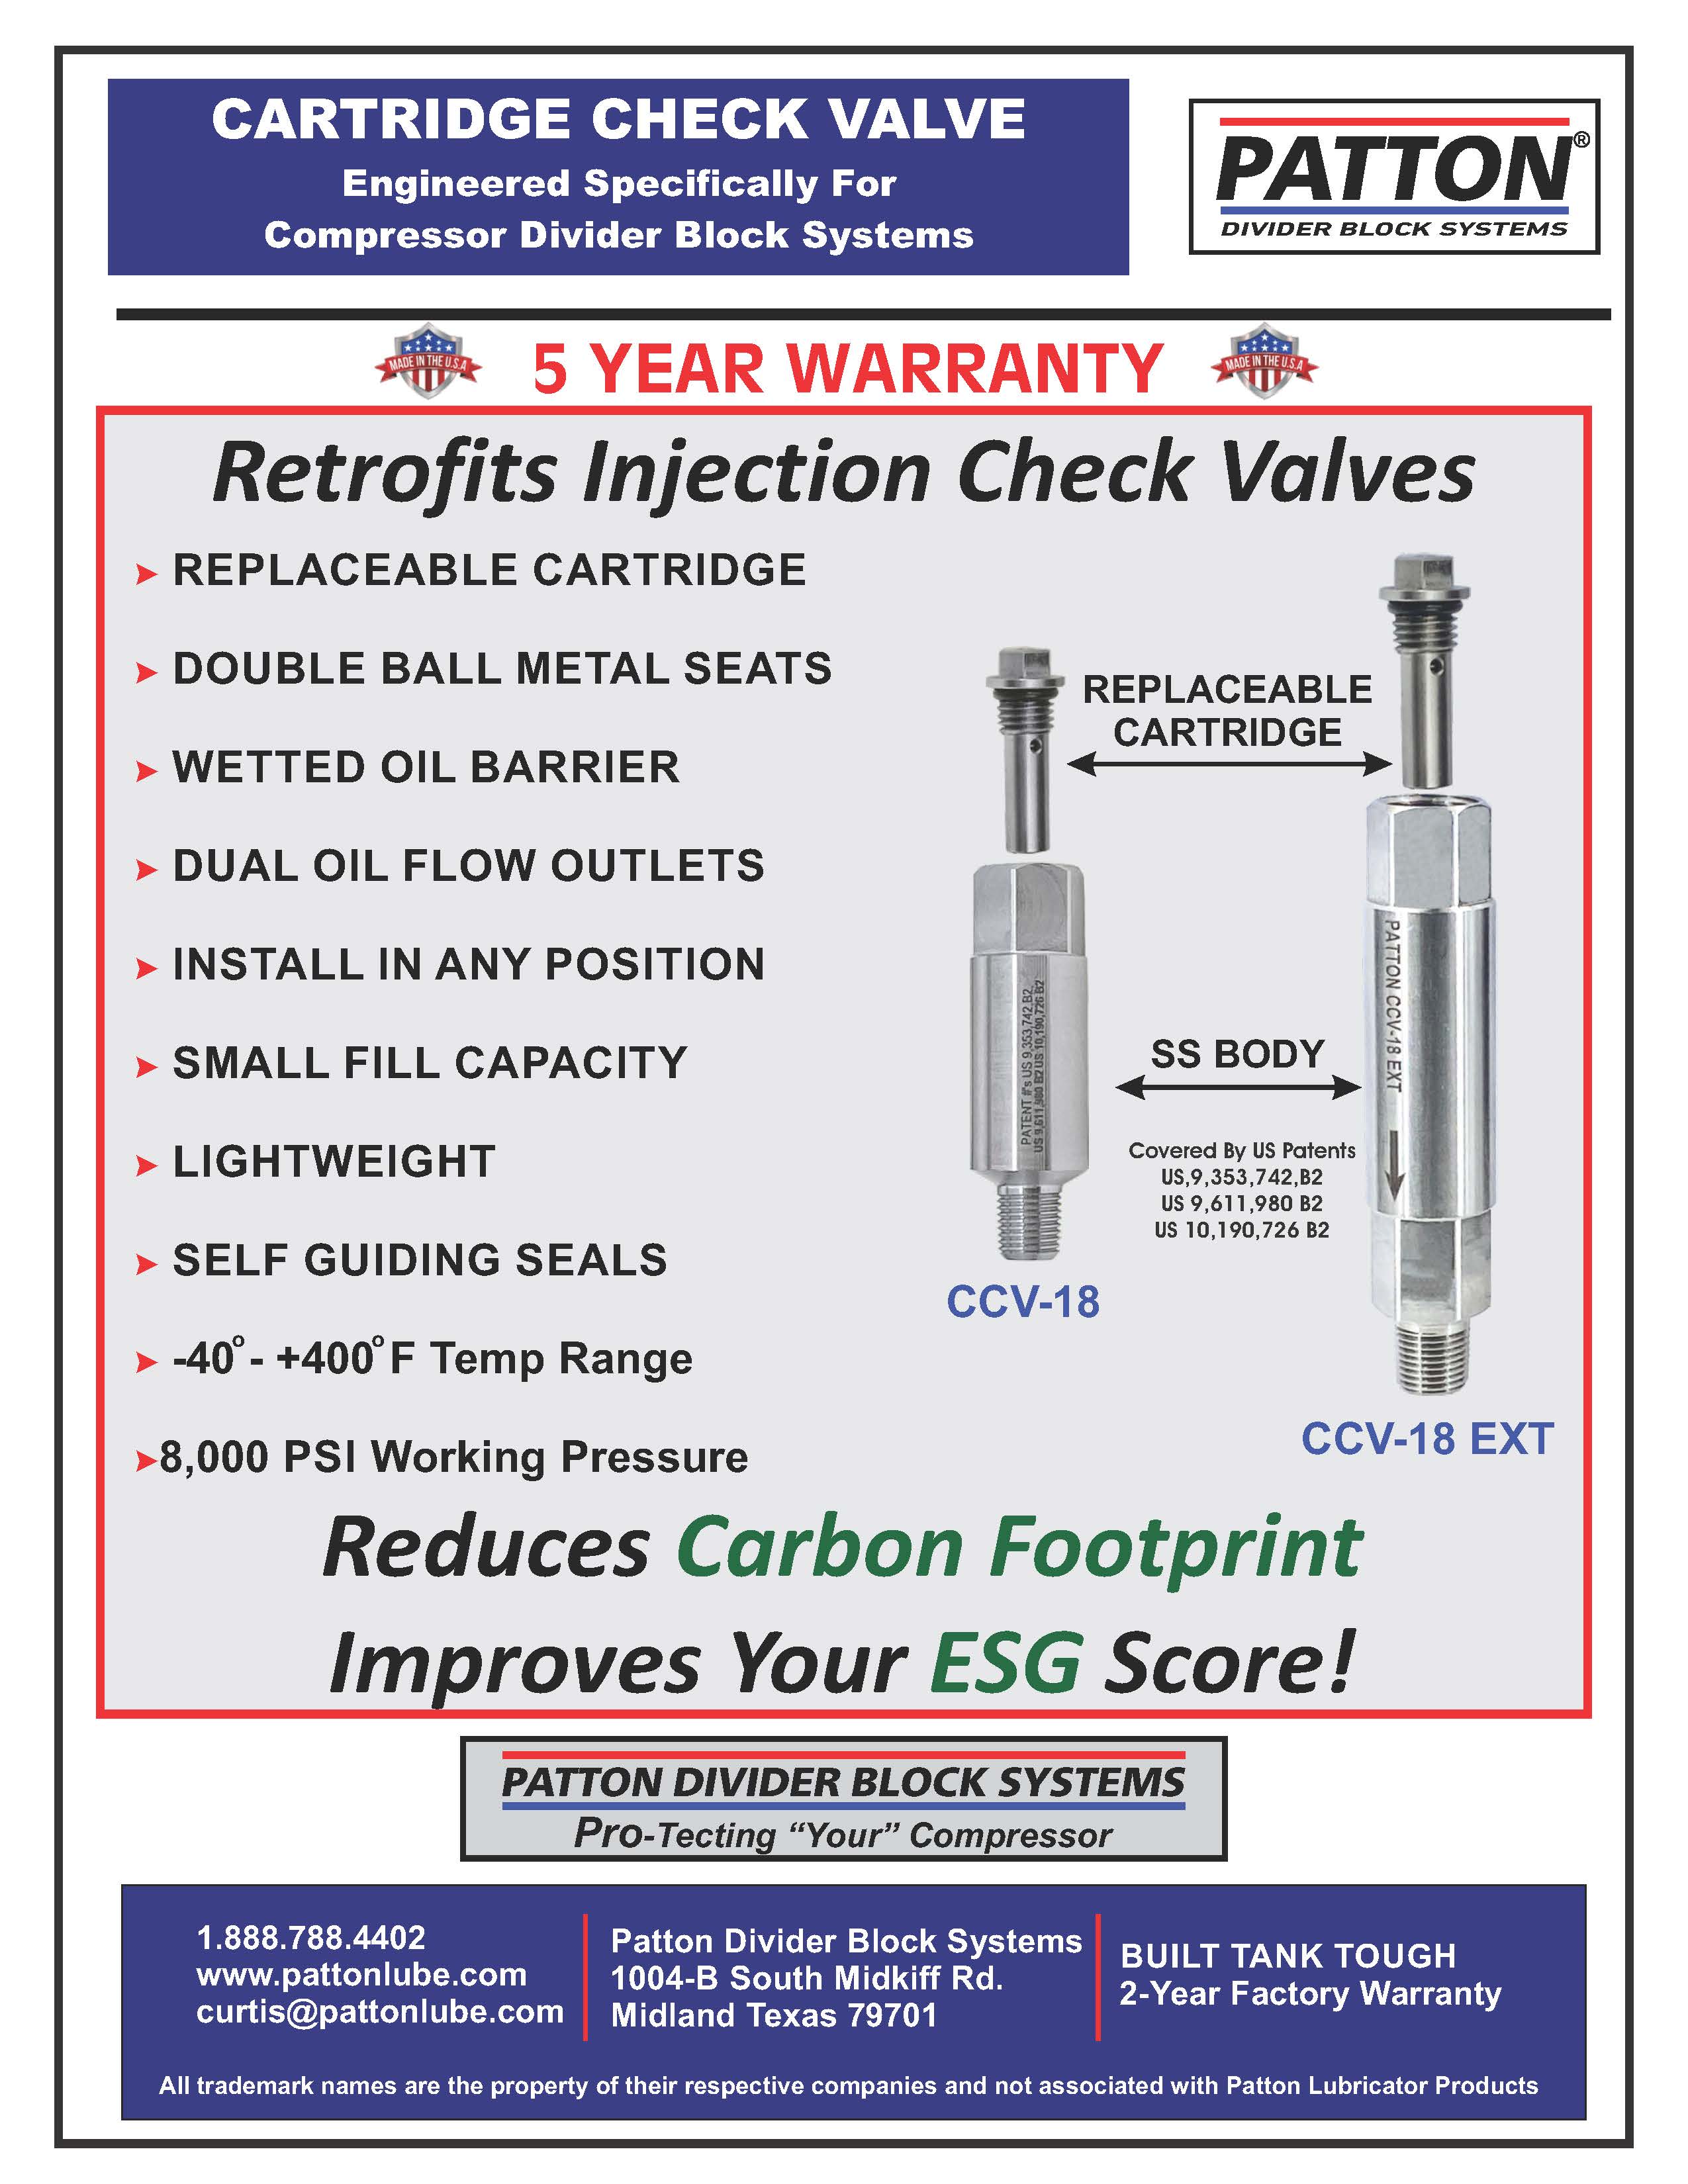 Cartridge check valve brochure page 1